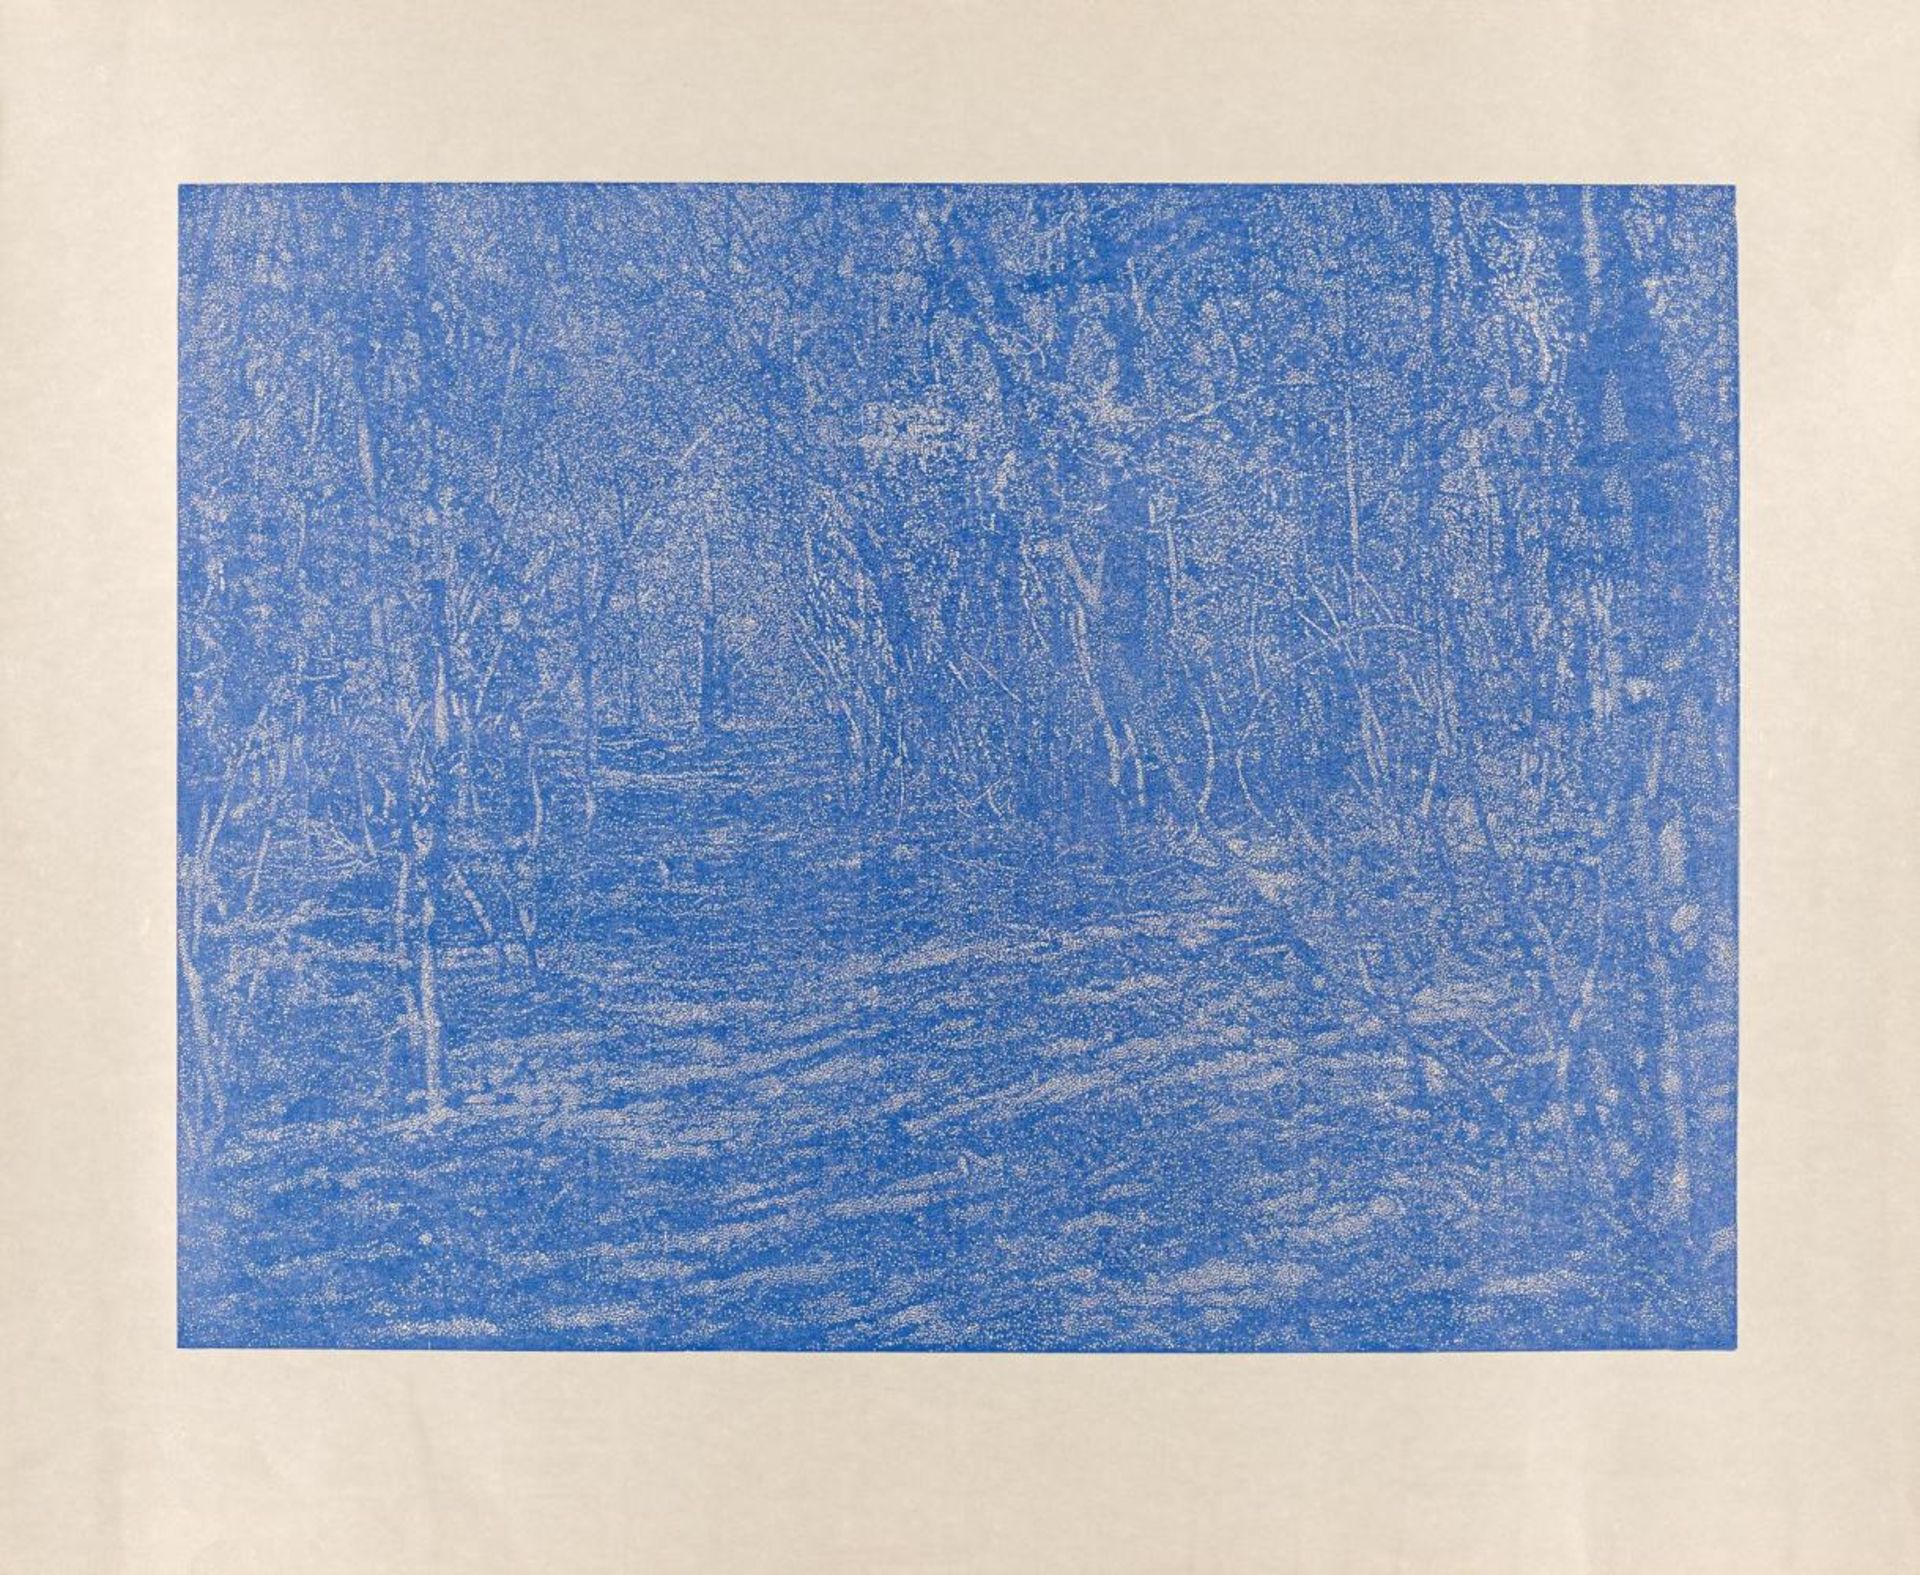 Gertsch, Franz1930 Mörigen/BernBagatelle I - Forest Path (Lapis Lazuli Blue). 2002. Woodcut on